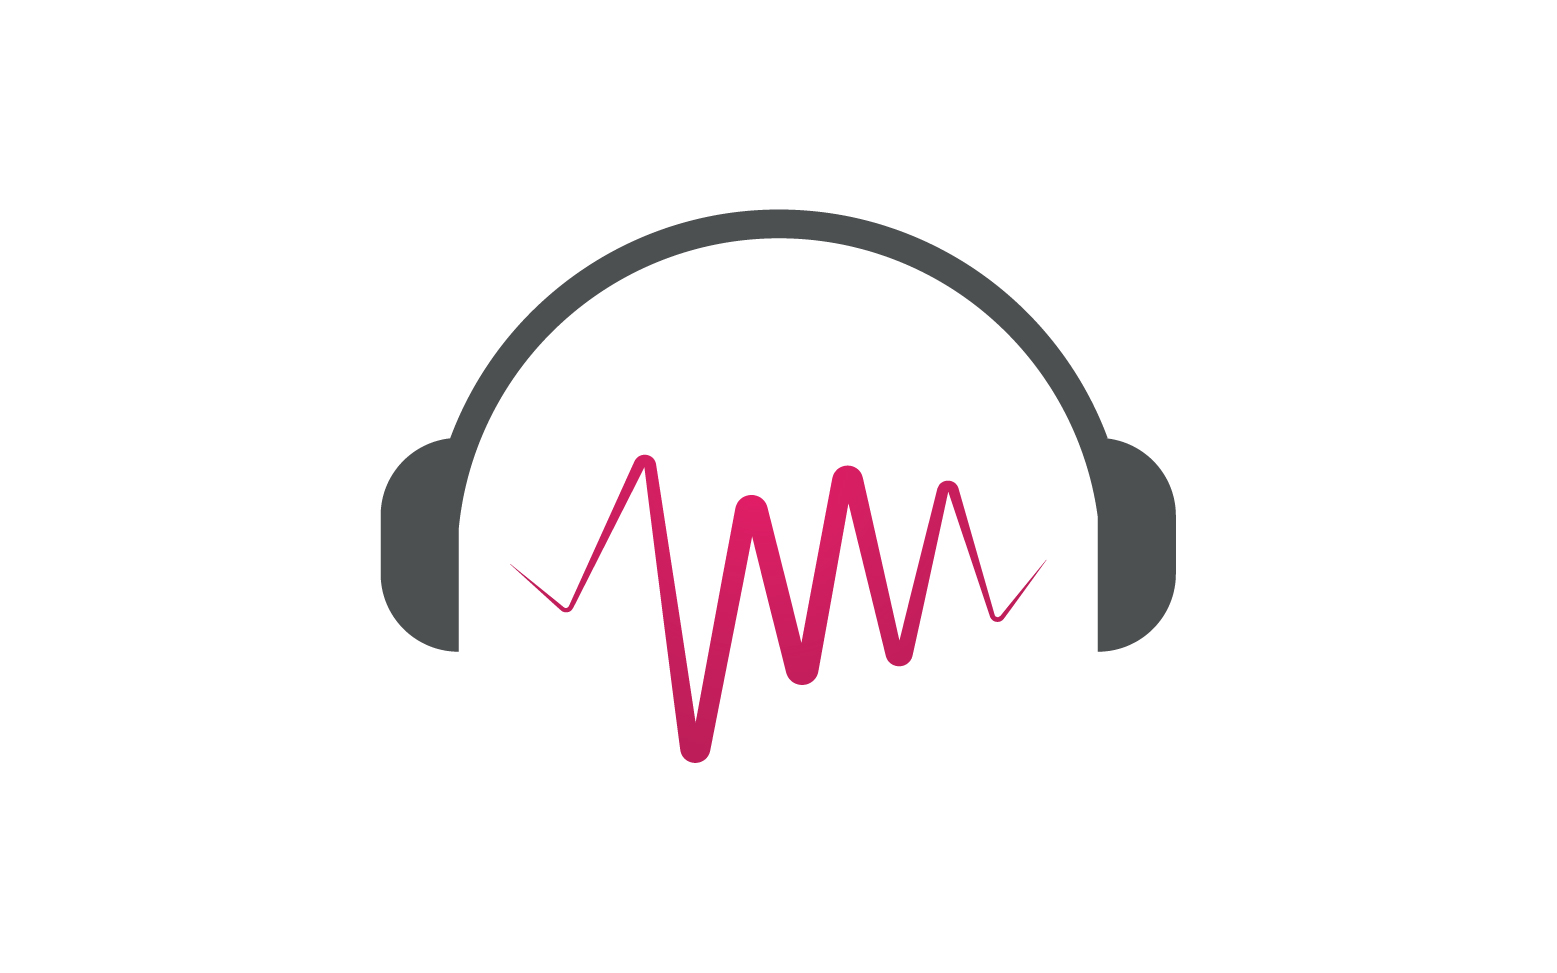 Music sound player app icon logo v.8